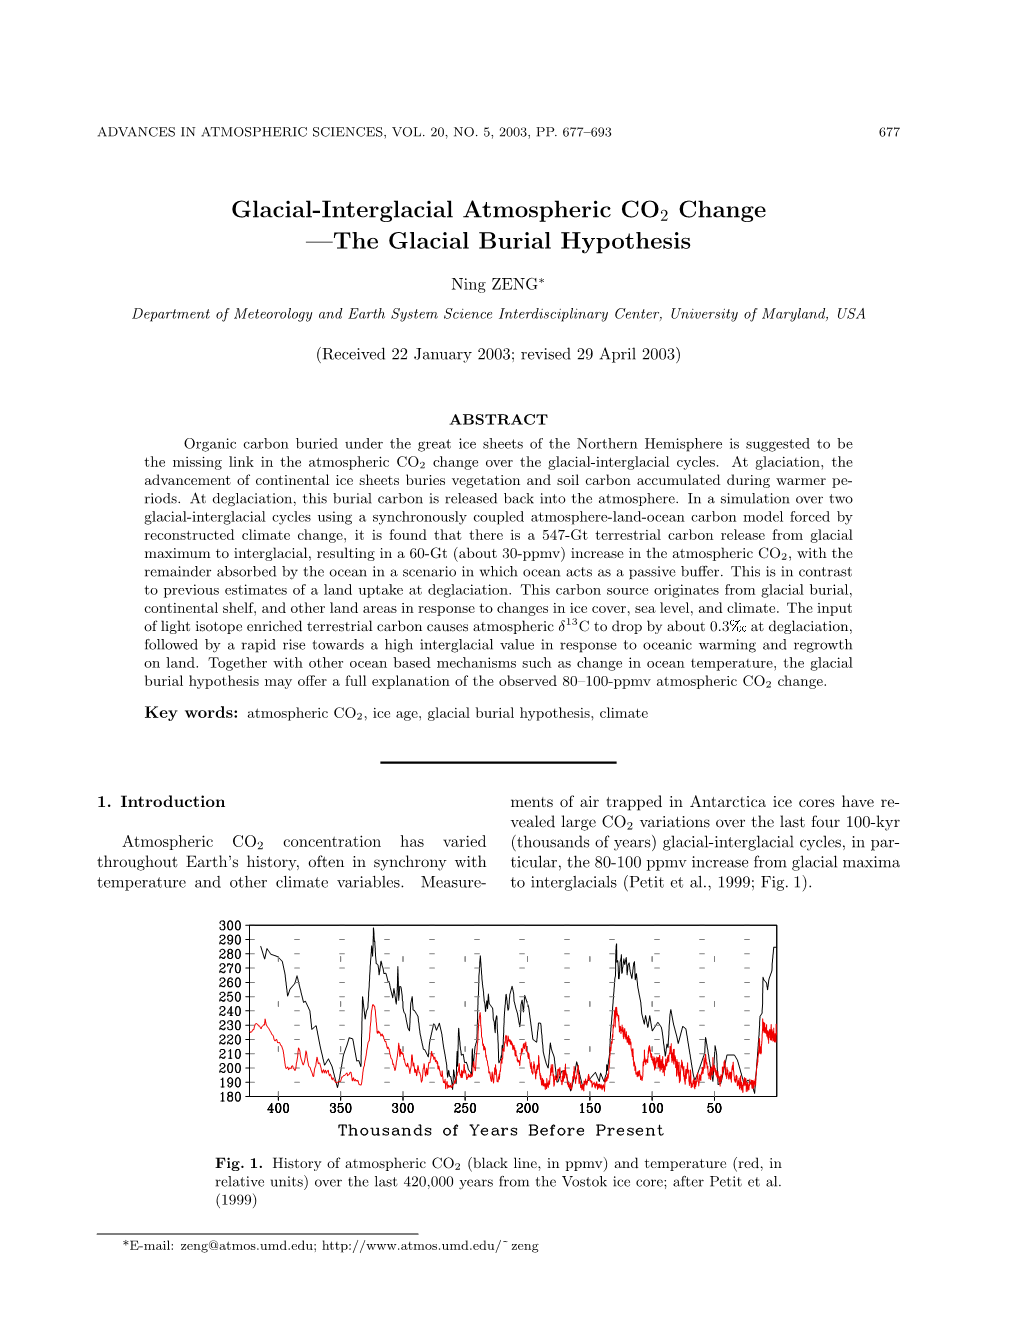 Glacial-Interglacial Atmospheric CO2 Change —The Glacial Burial Hypothesis